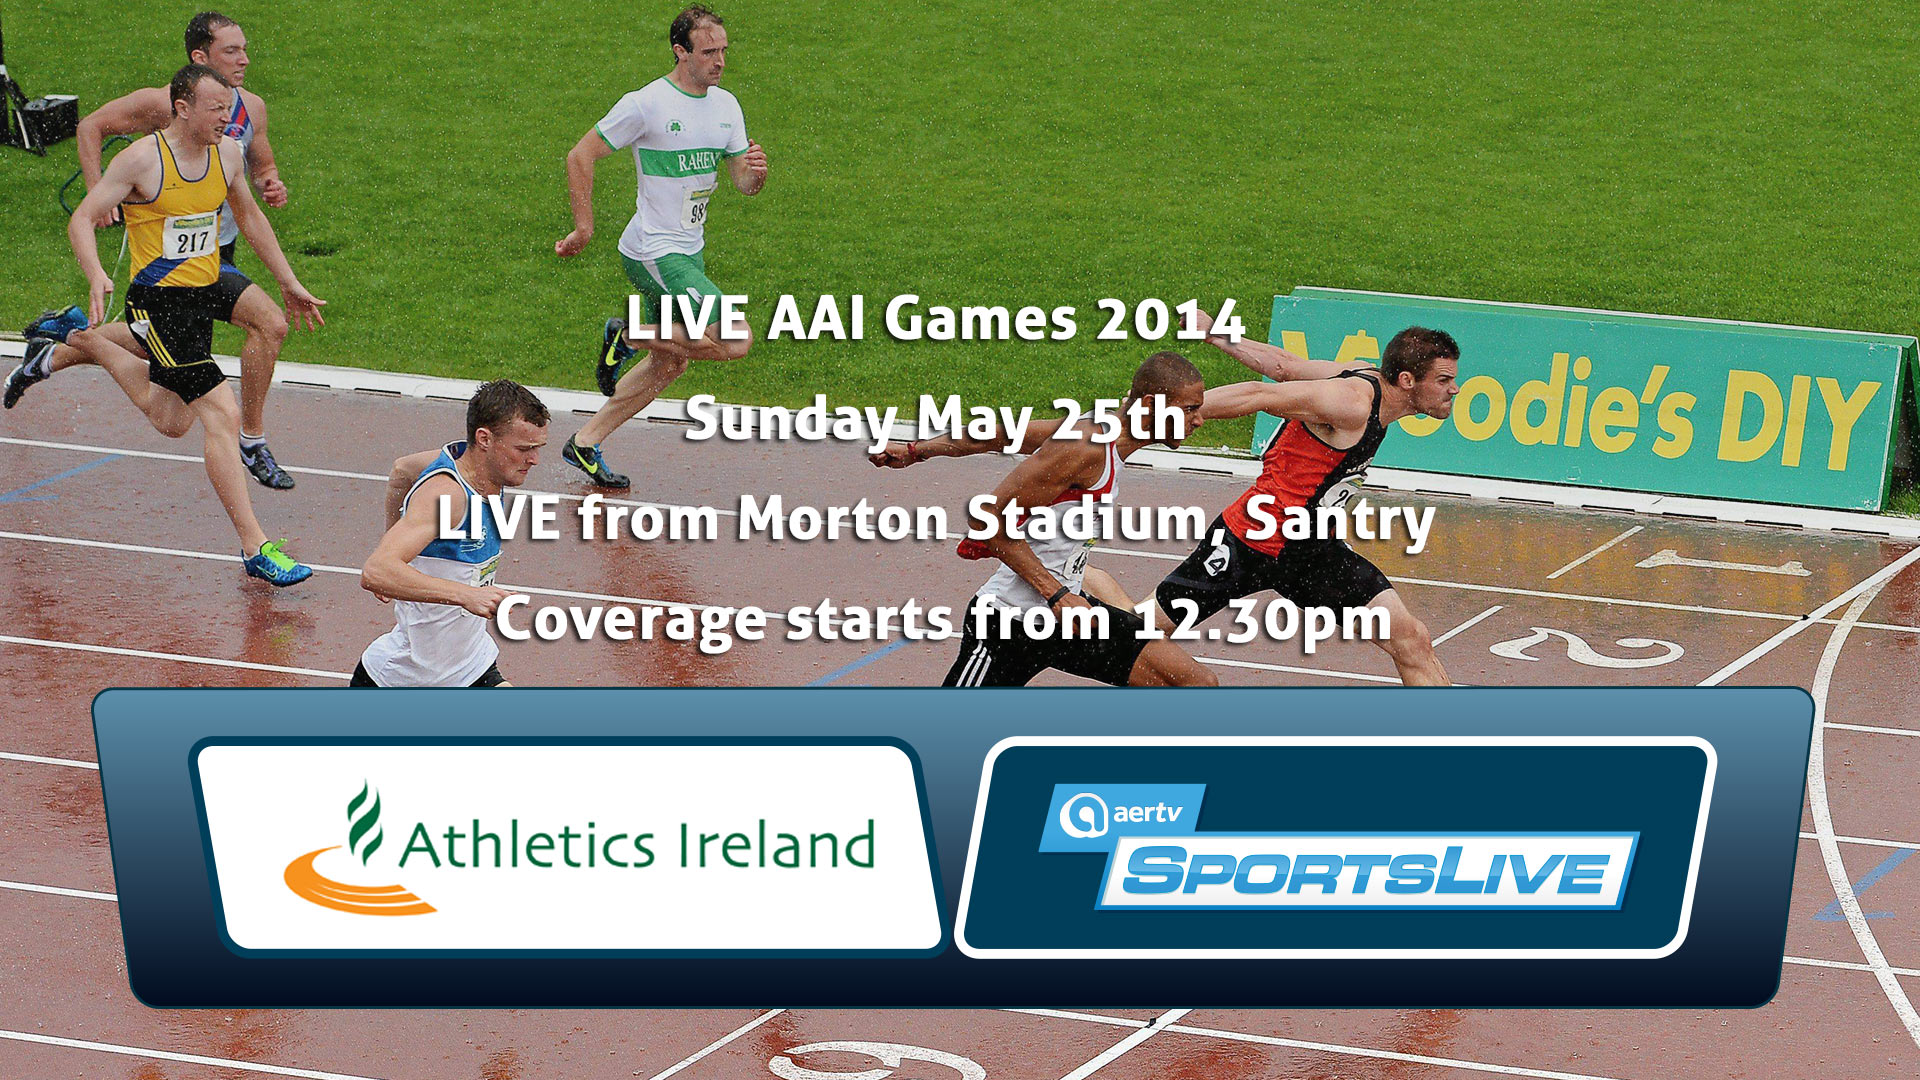 Live Streaming Of Three Outdoor EventsAthletics Ireland